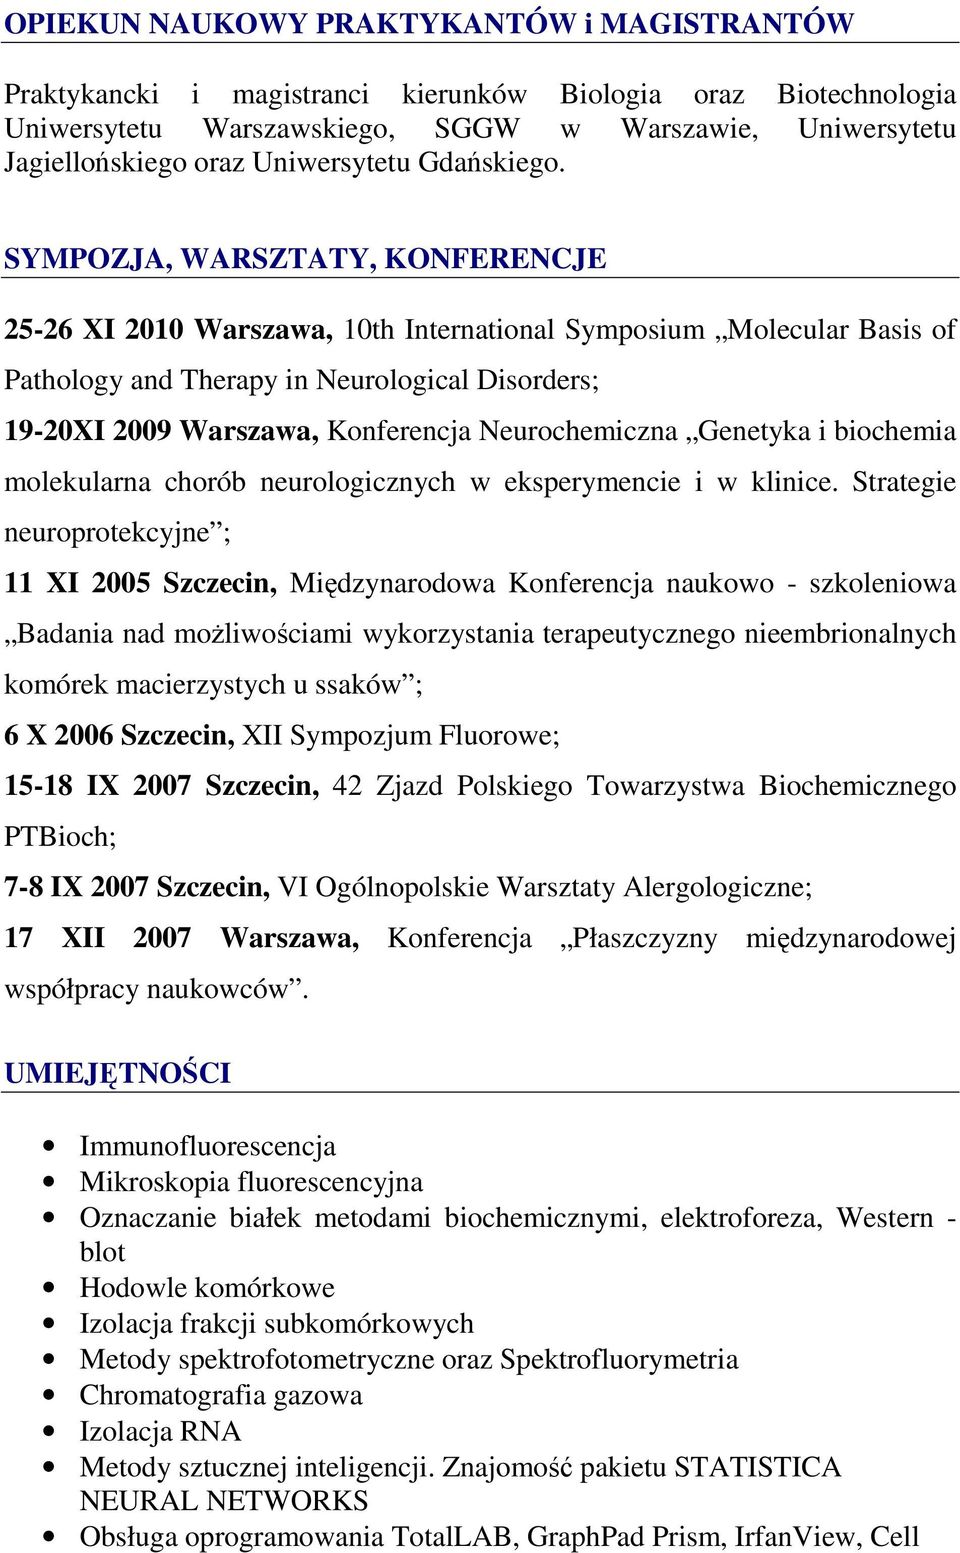 SYMPOZJA, WARSZTATY, KONFERENCJE 25-26 XI 2010 Warszawa, 10th International Symposium Molecular Basis of Pathology and Therapy in Neurological Disorders; 19-20XI 2009 Warszawa, Konferencja